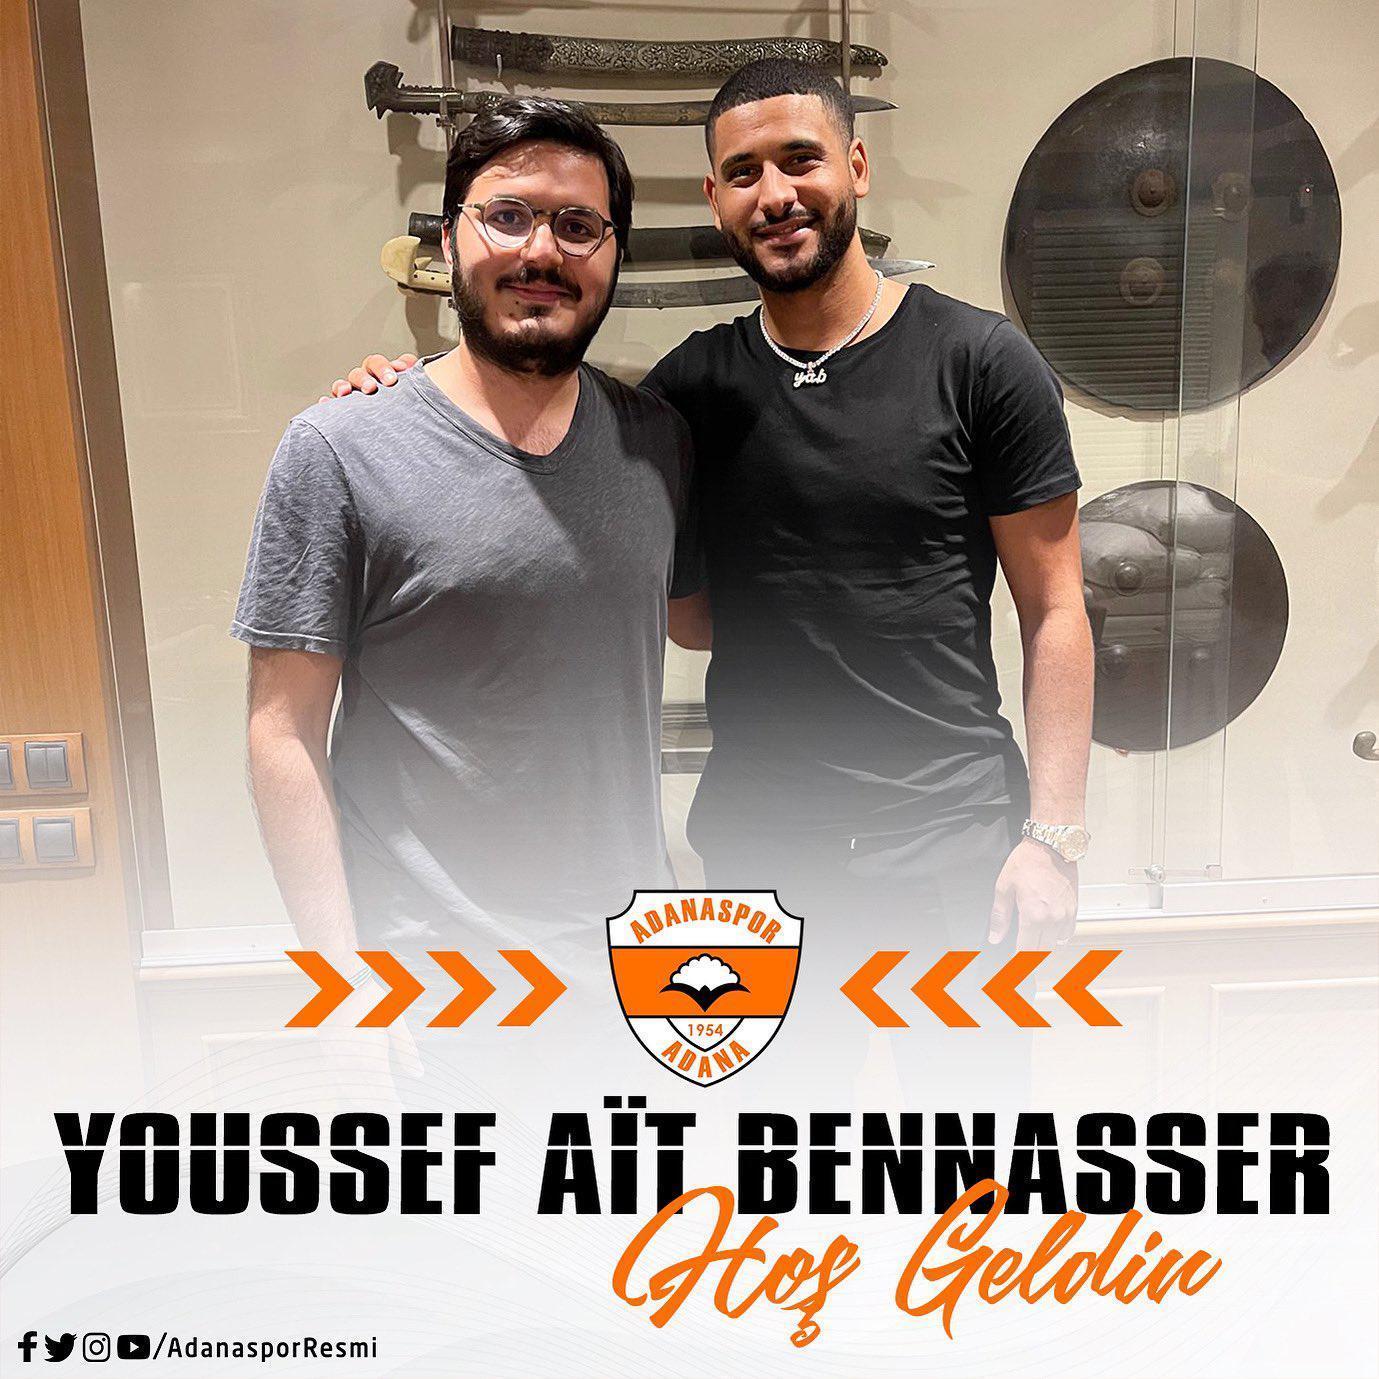 Adanaspordan flaş transfer: Youssef Ait Bennasser